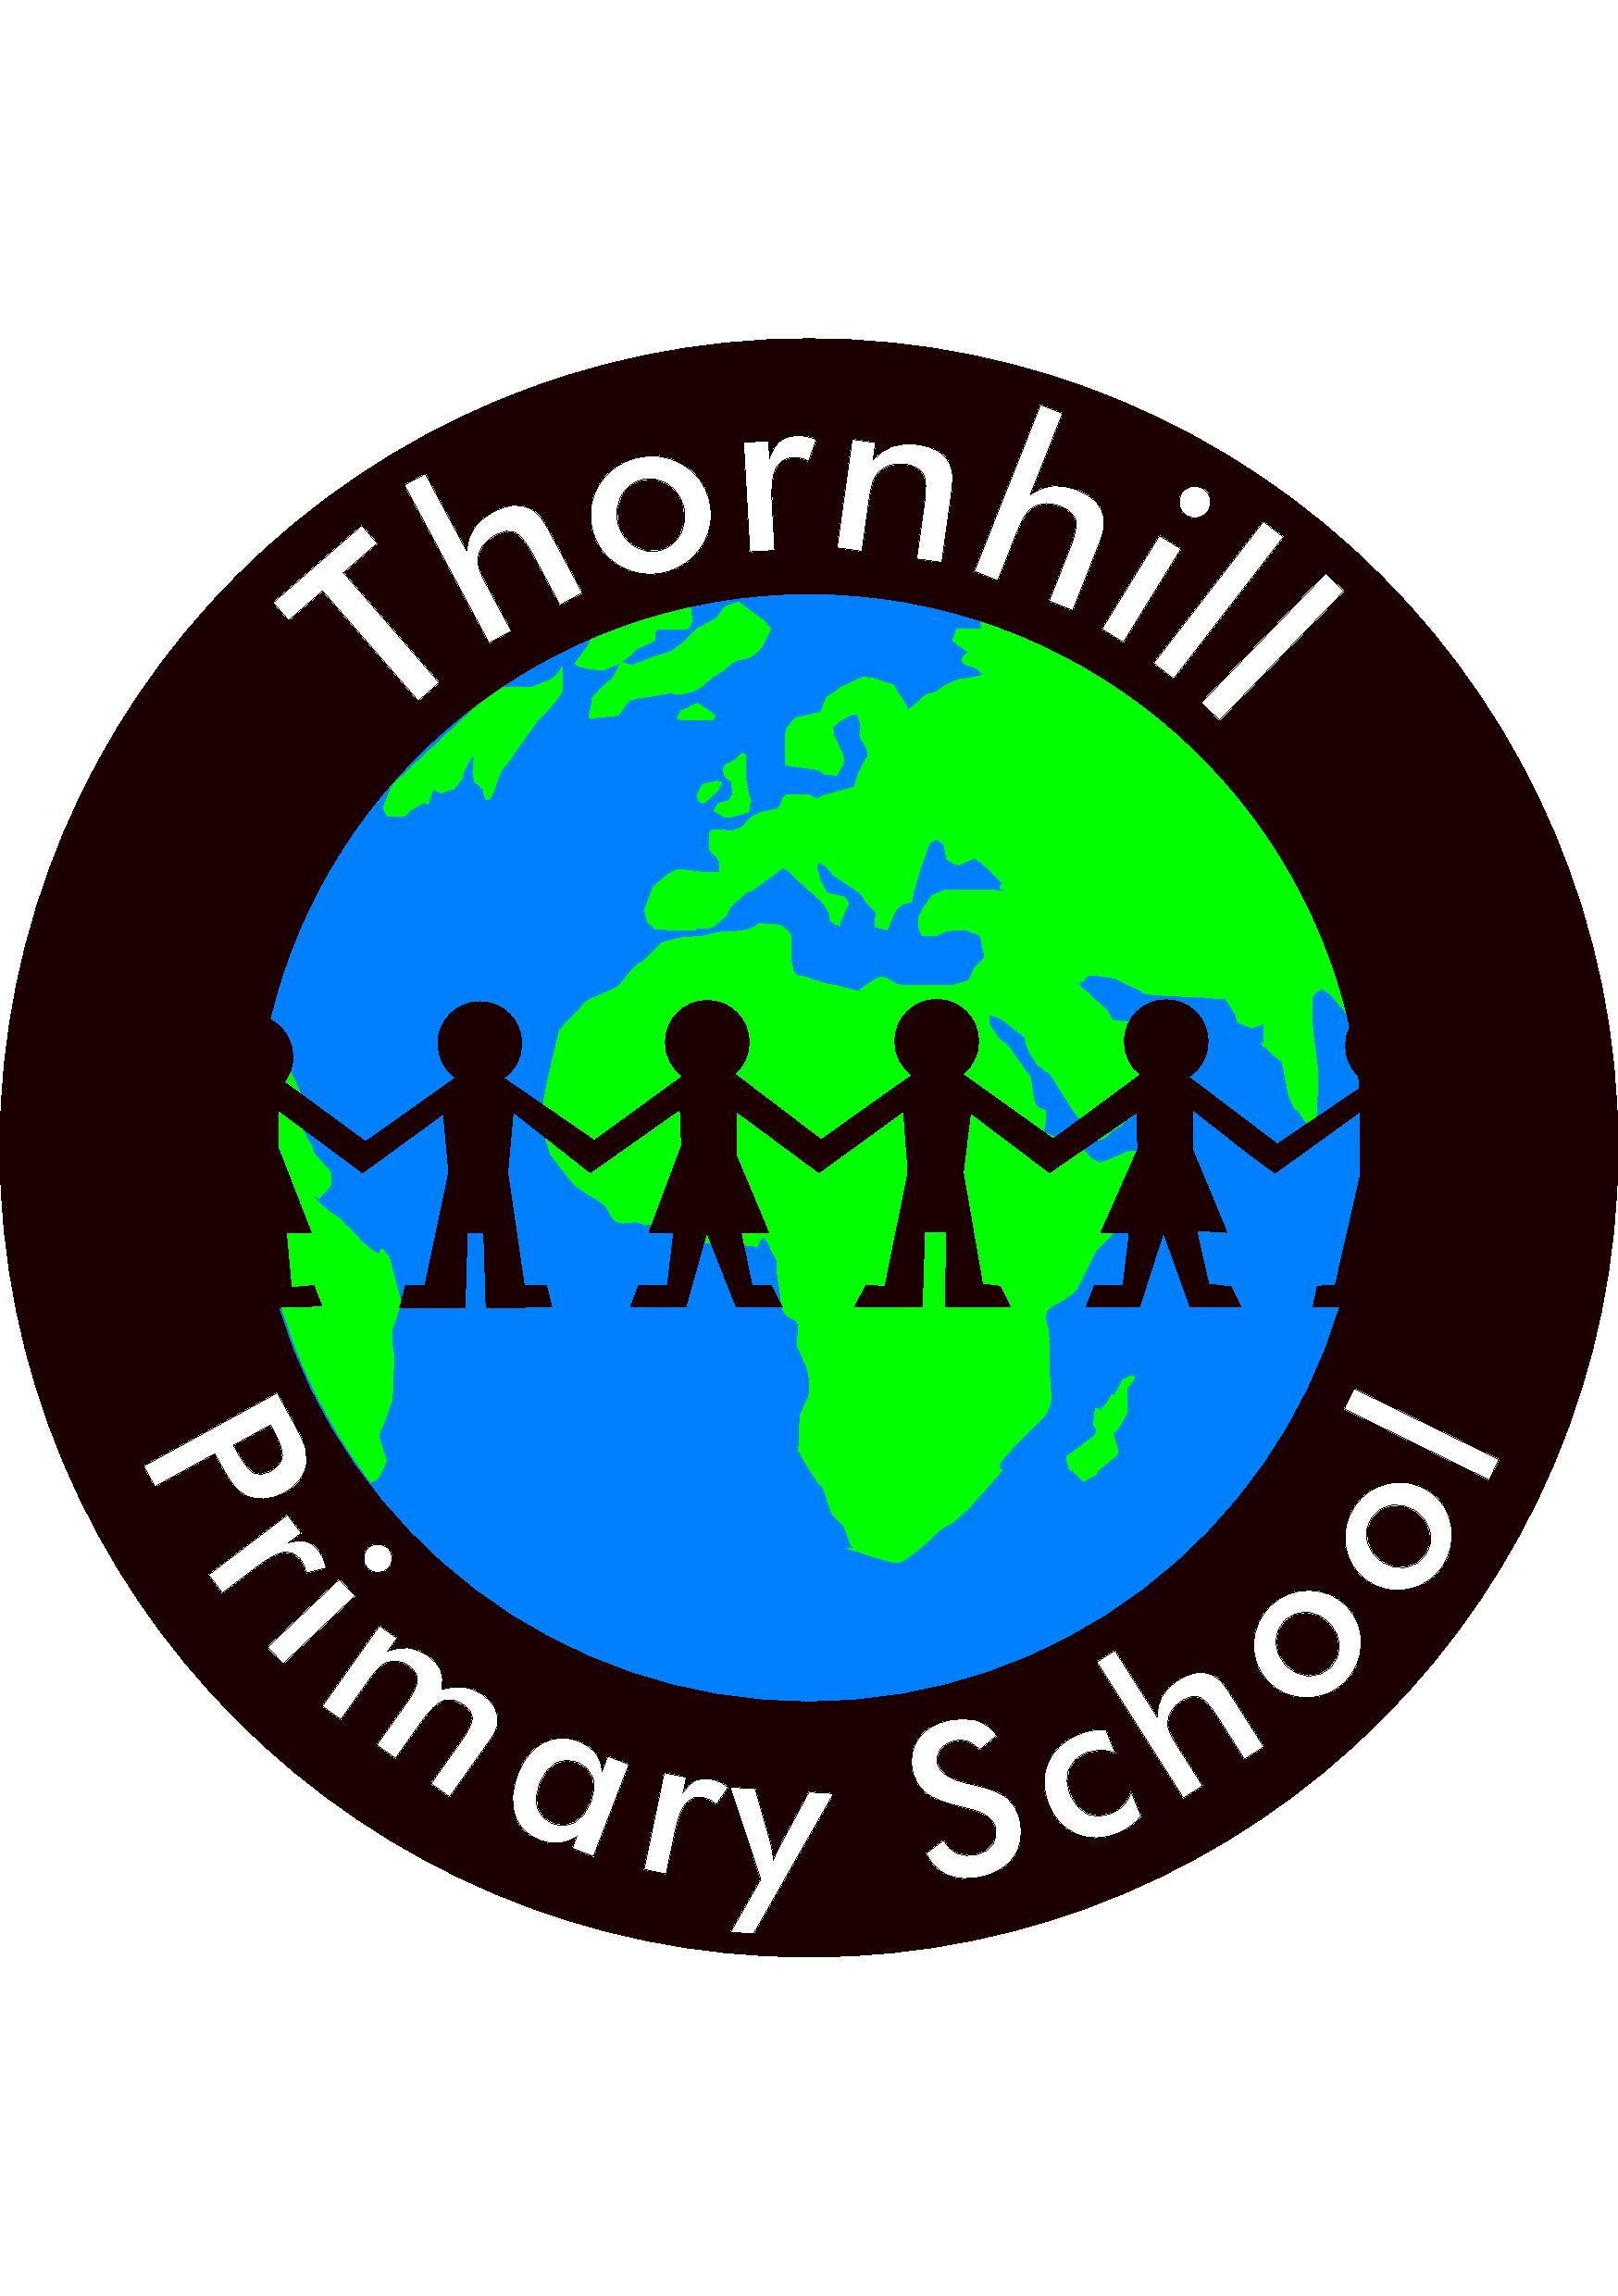 Thornhill logo.jpg